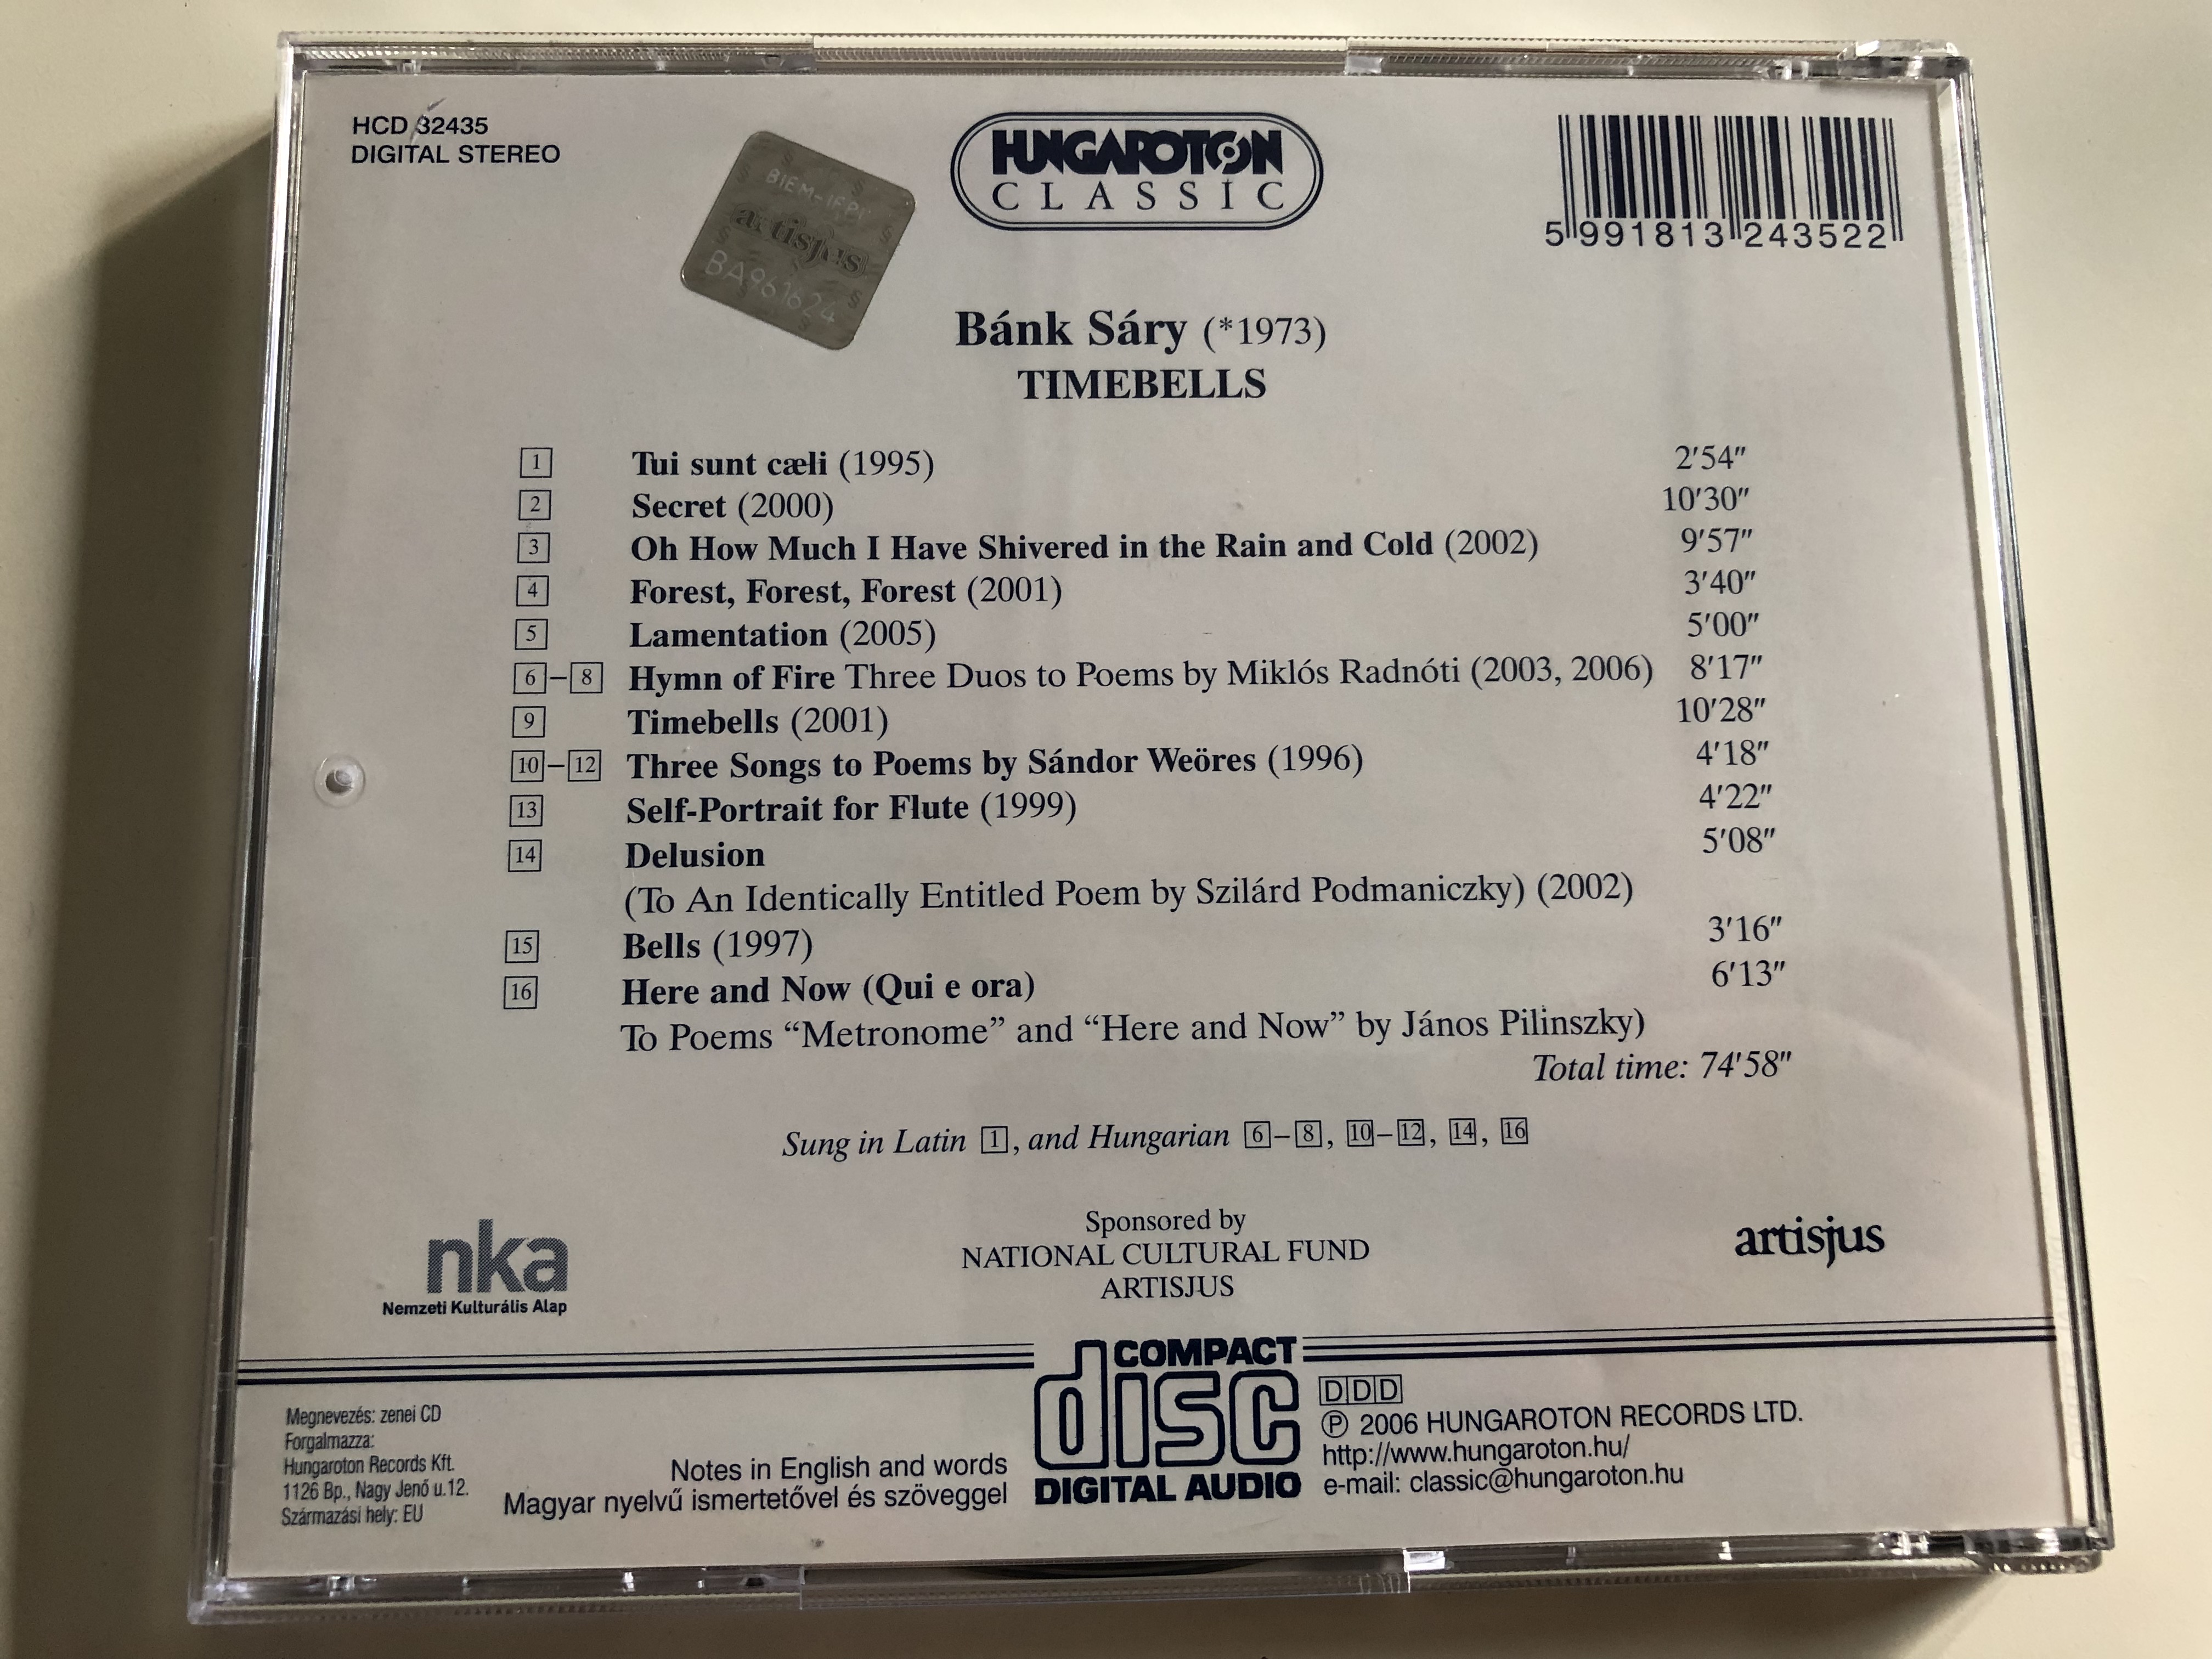 b-nk-s-ry-timebells-hungaroton-audio-cd-2006-hcd-32435-8-.jpg